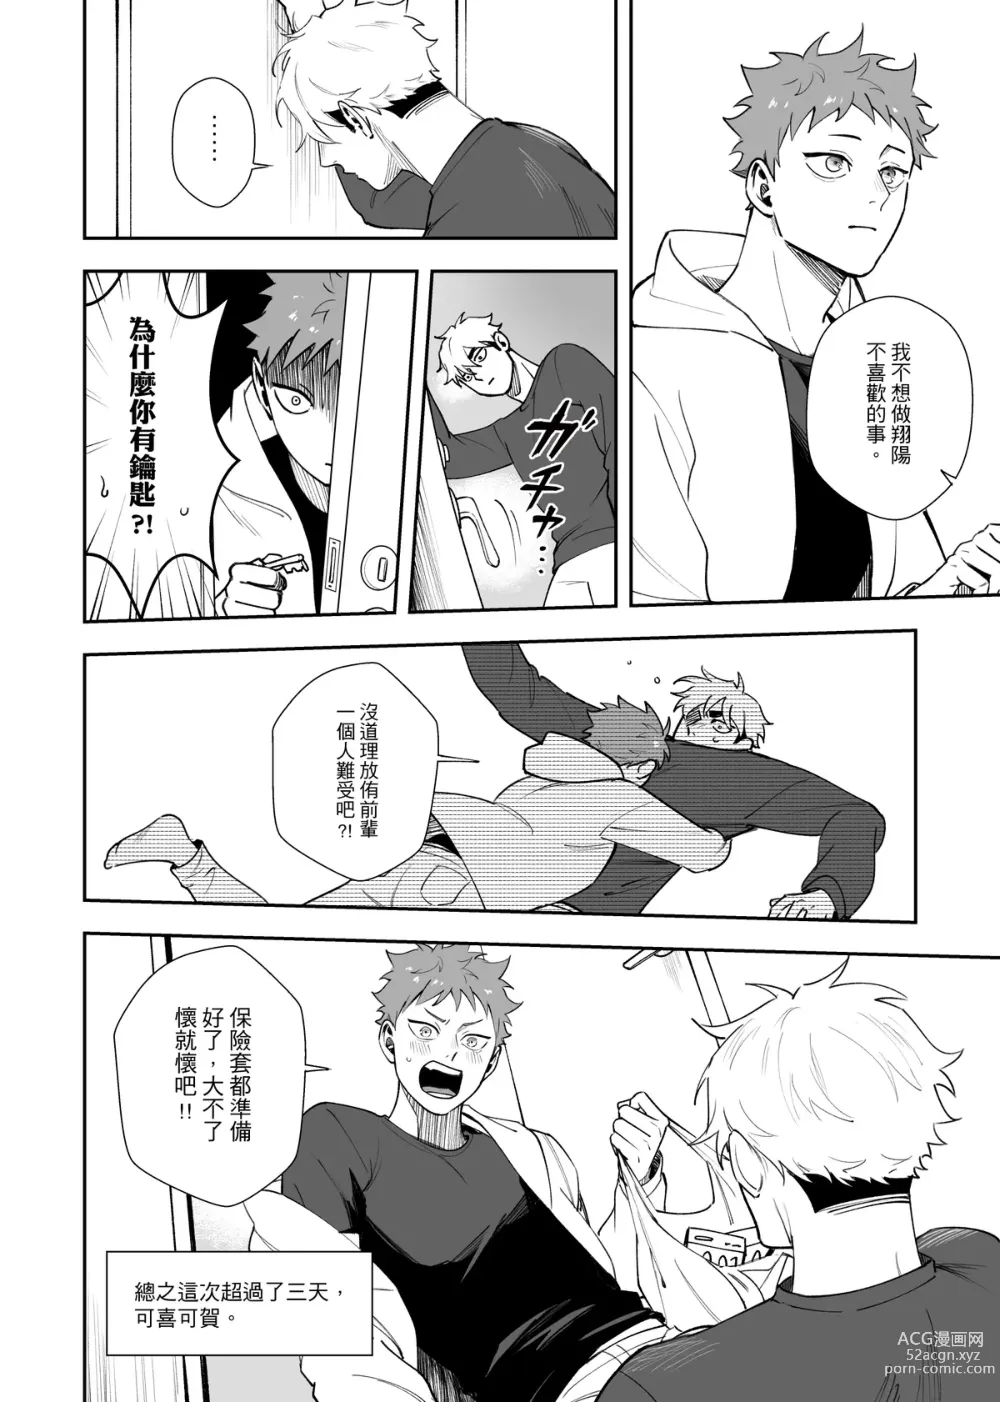 Page 23 of doujinshi 不好意思要請假三天三夜